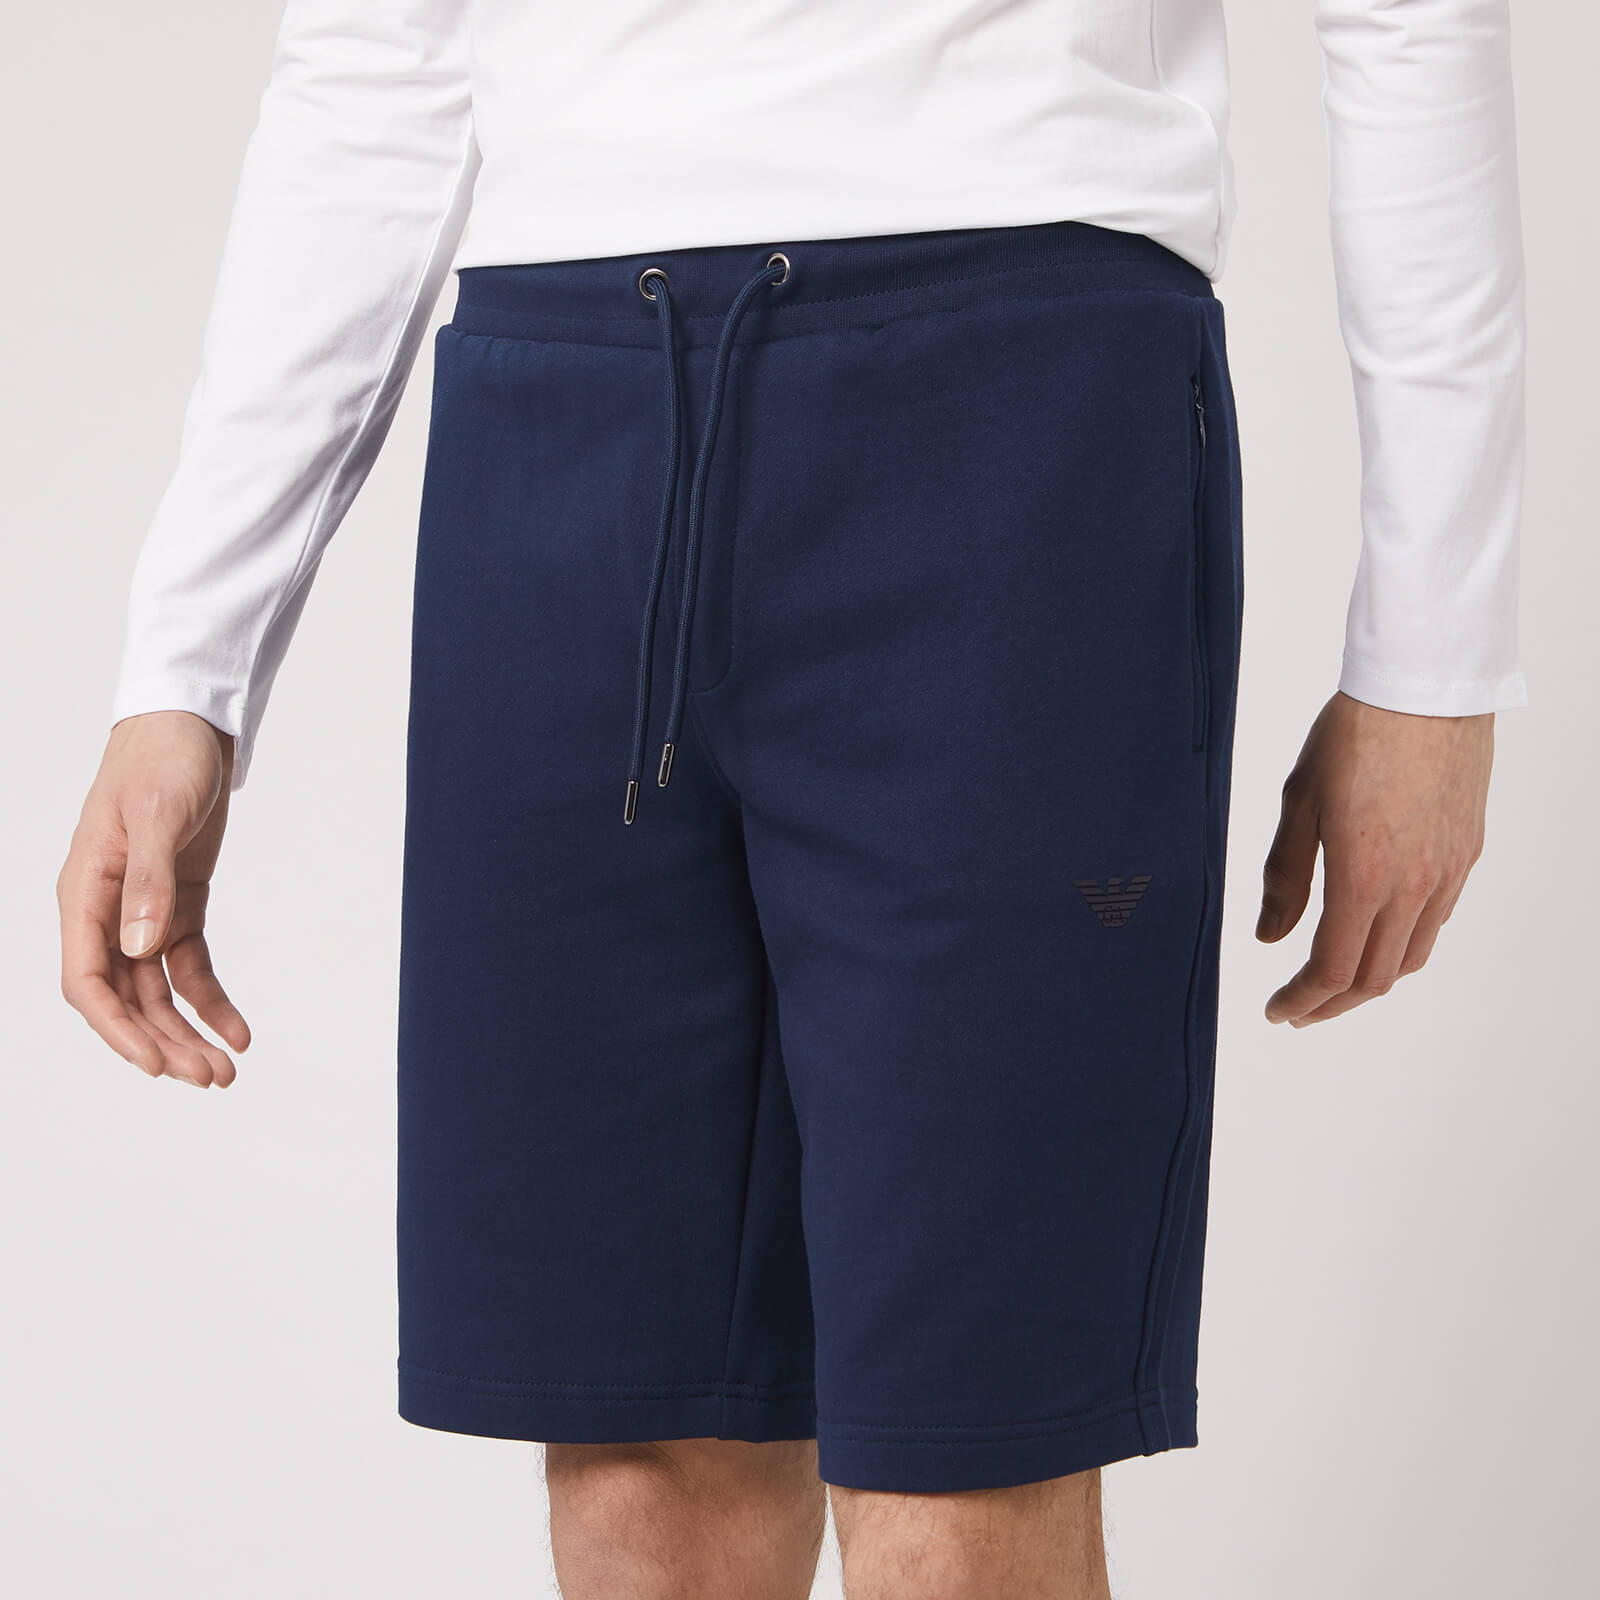 mens navy jersey shorts